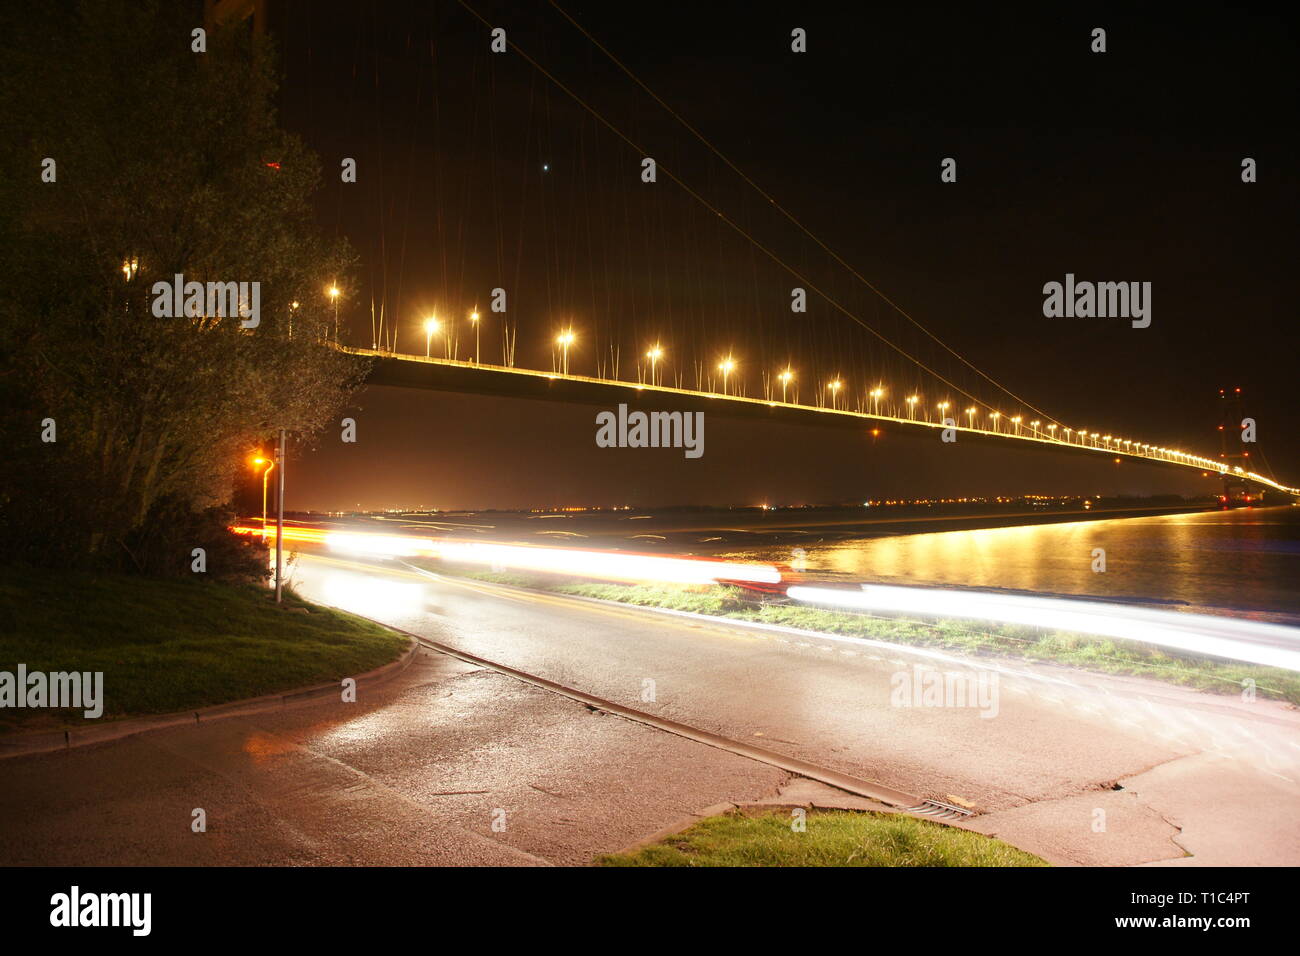 Humber Bridge, single-span sospensione ponte di notte Foto Stock